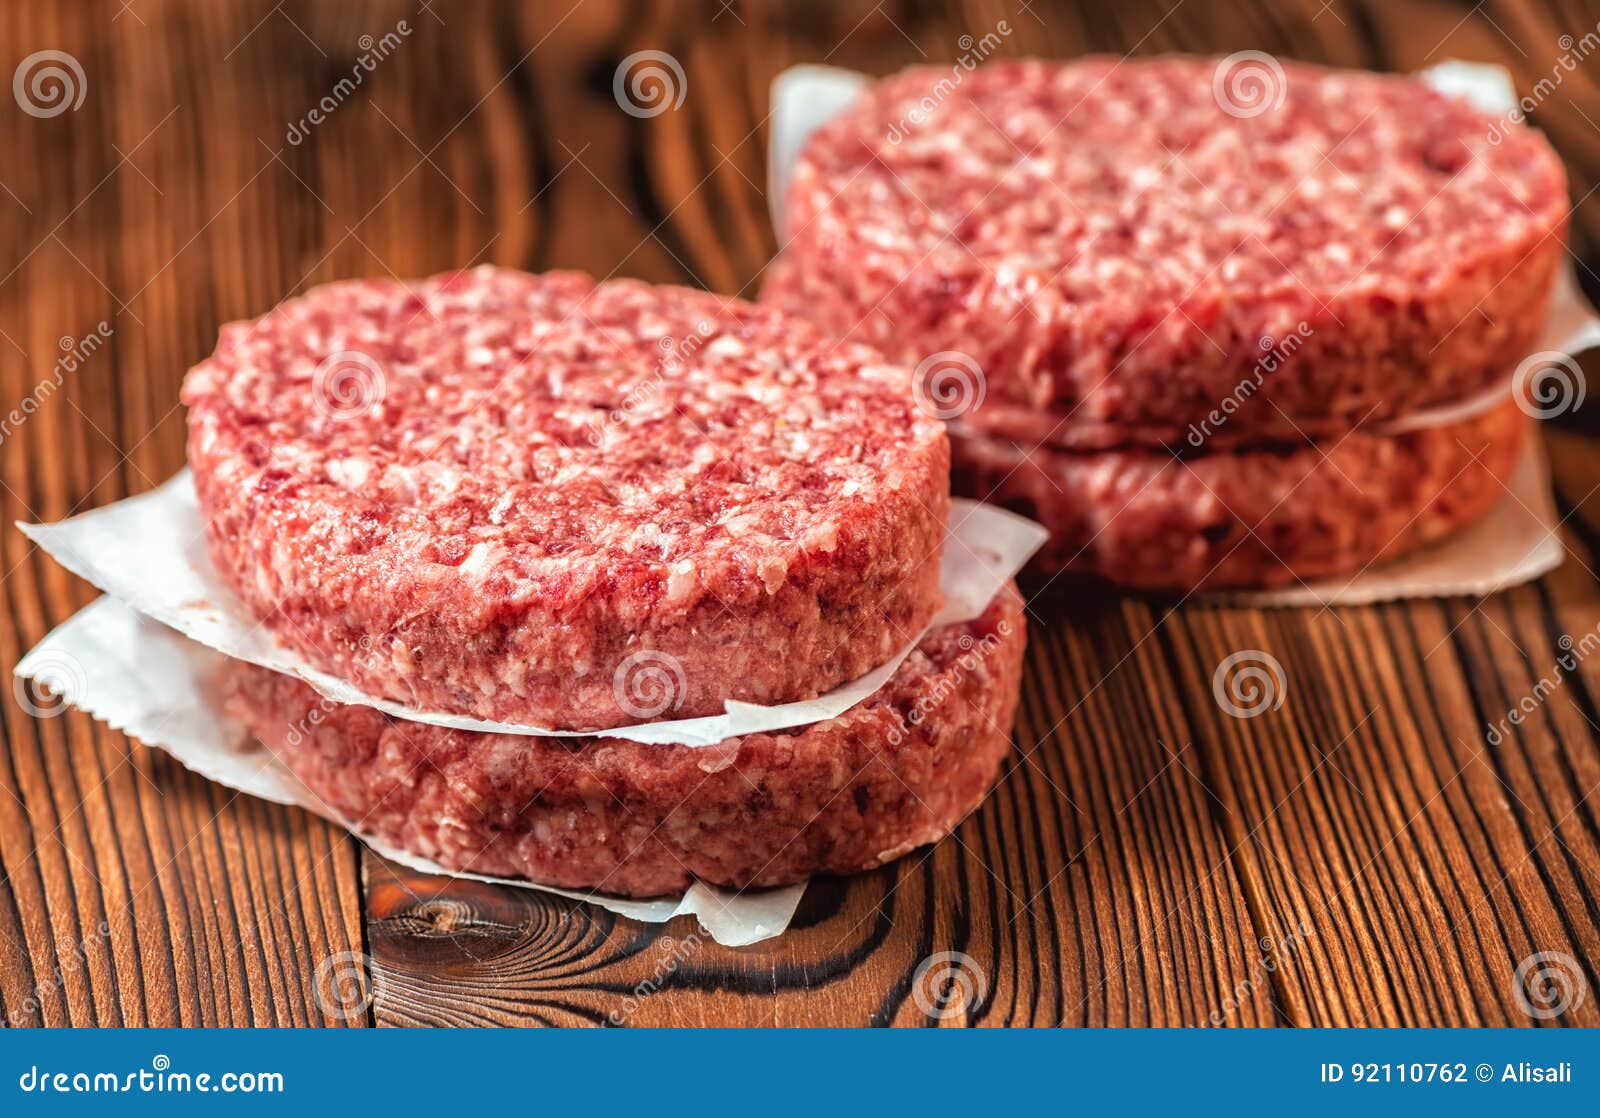 raw ground beef meat hamburger patties on paper,